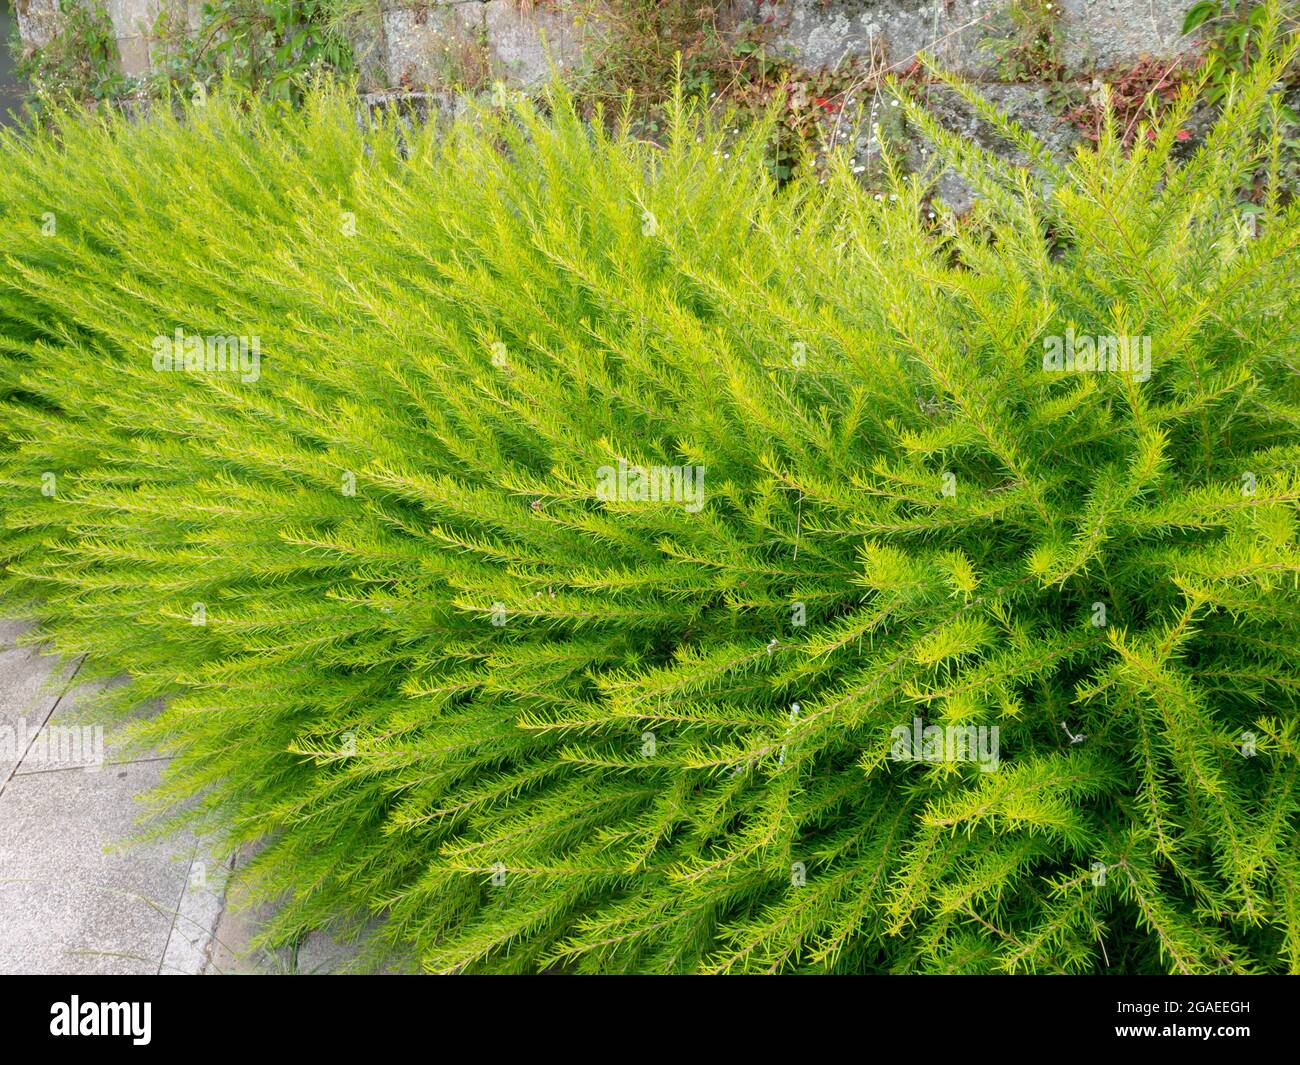 Bright green fluffy decorative shrubs. Prickly spider-flower plants or juniper-leaf grevillea. Stock Photo